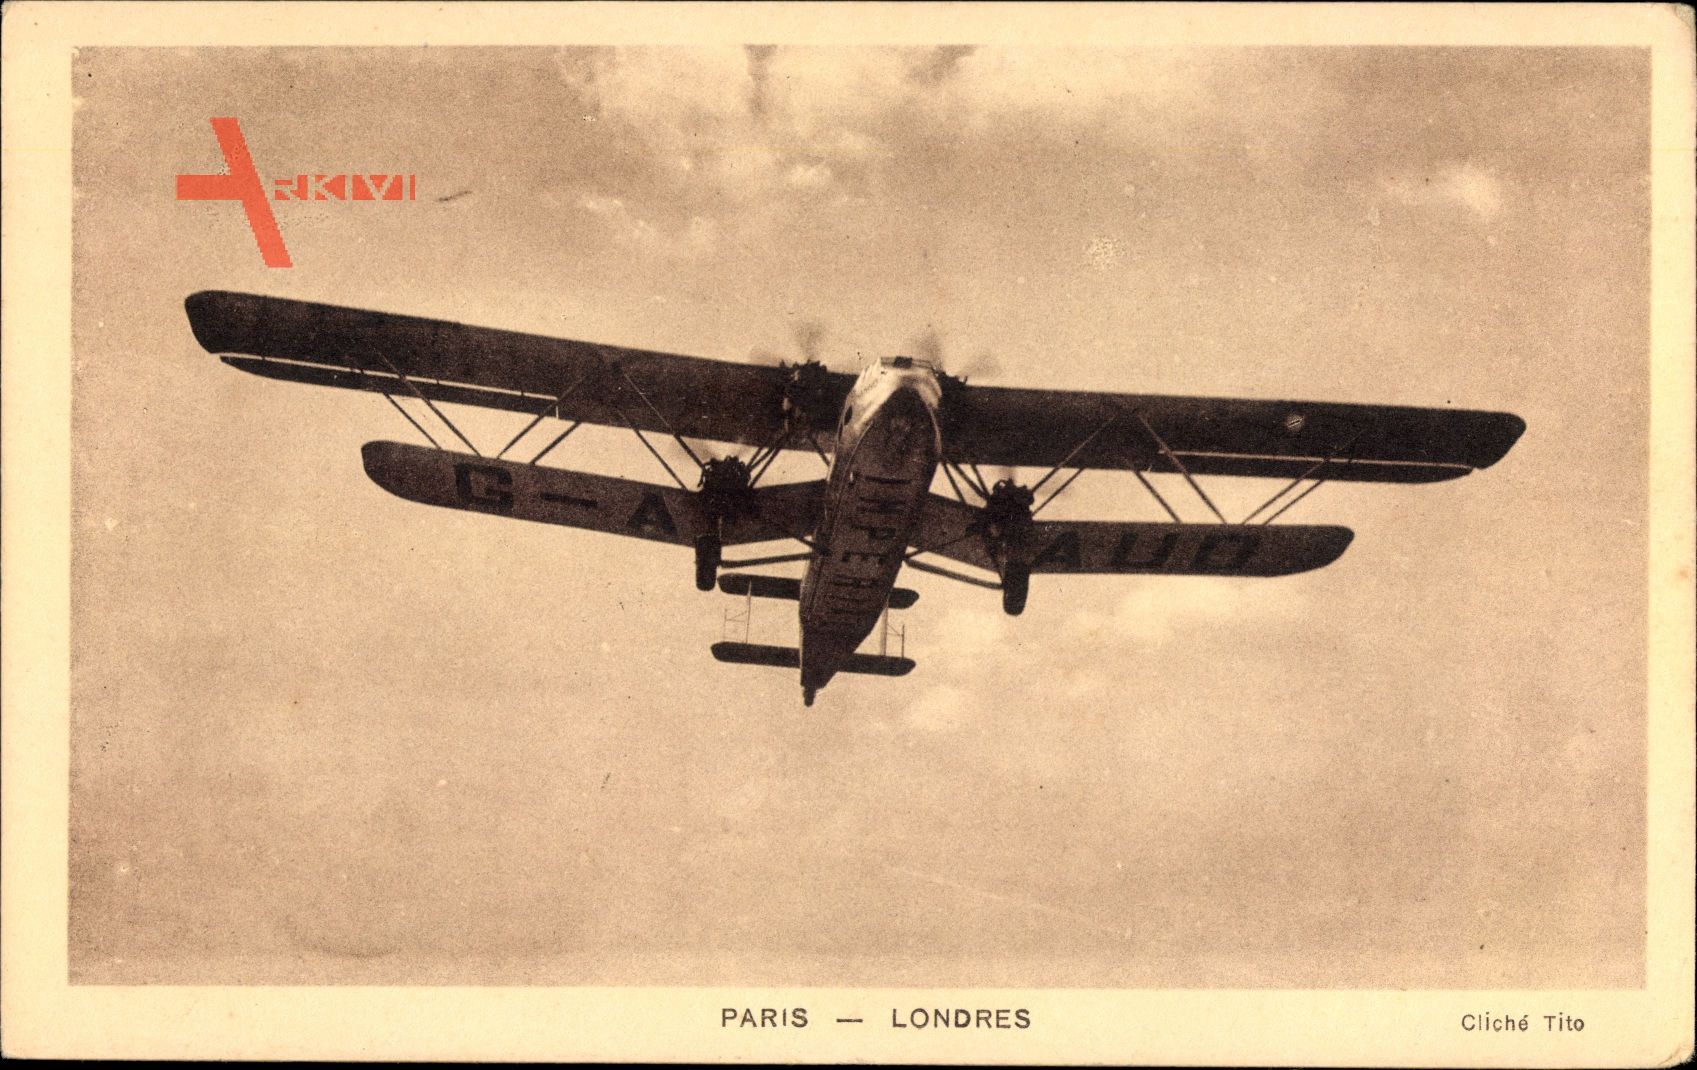 Paris Londres, Doppeldecker, Avion Hanno Type Handley Page 42